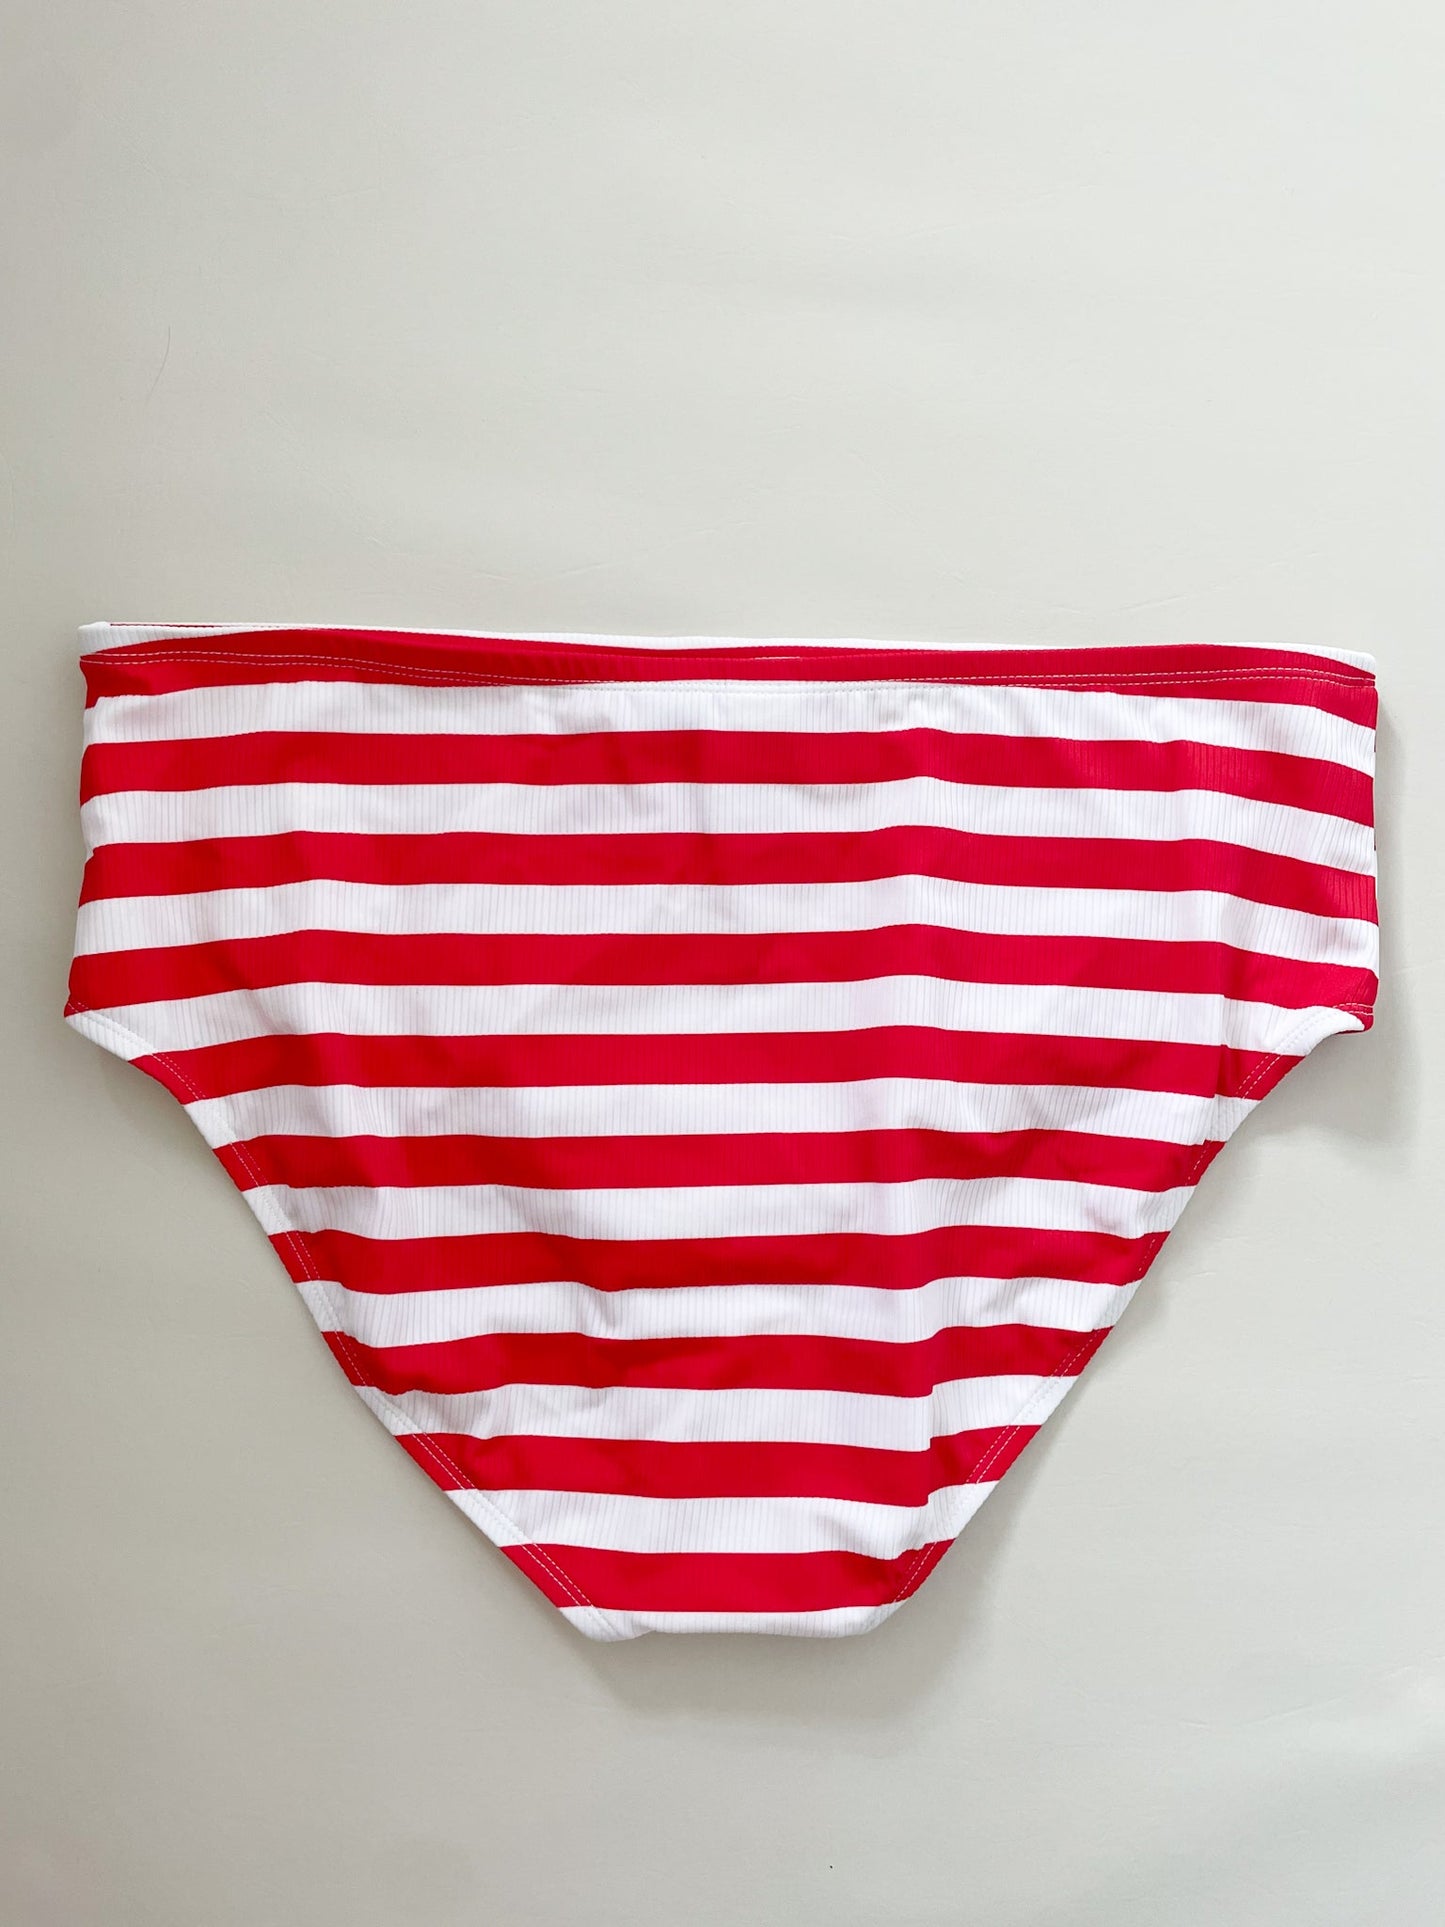 California Sunshine Red and White Striped High Waist Bikini Bottoms NWT - 3X